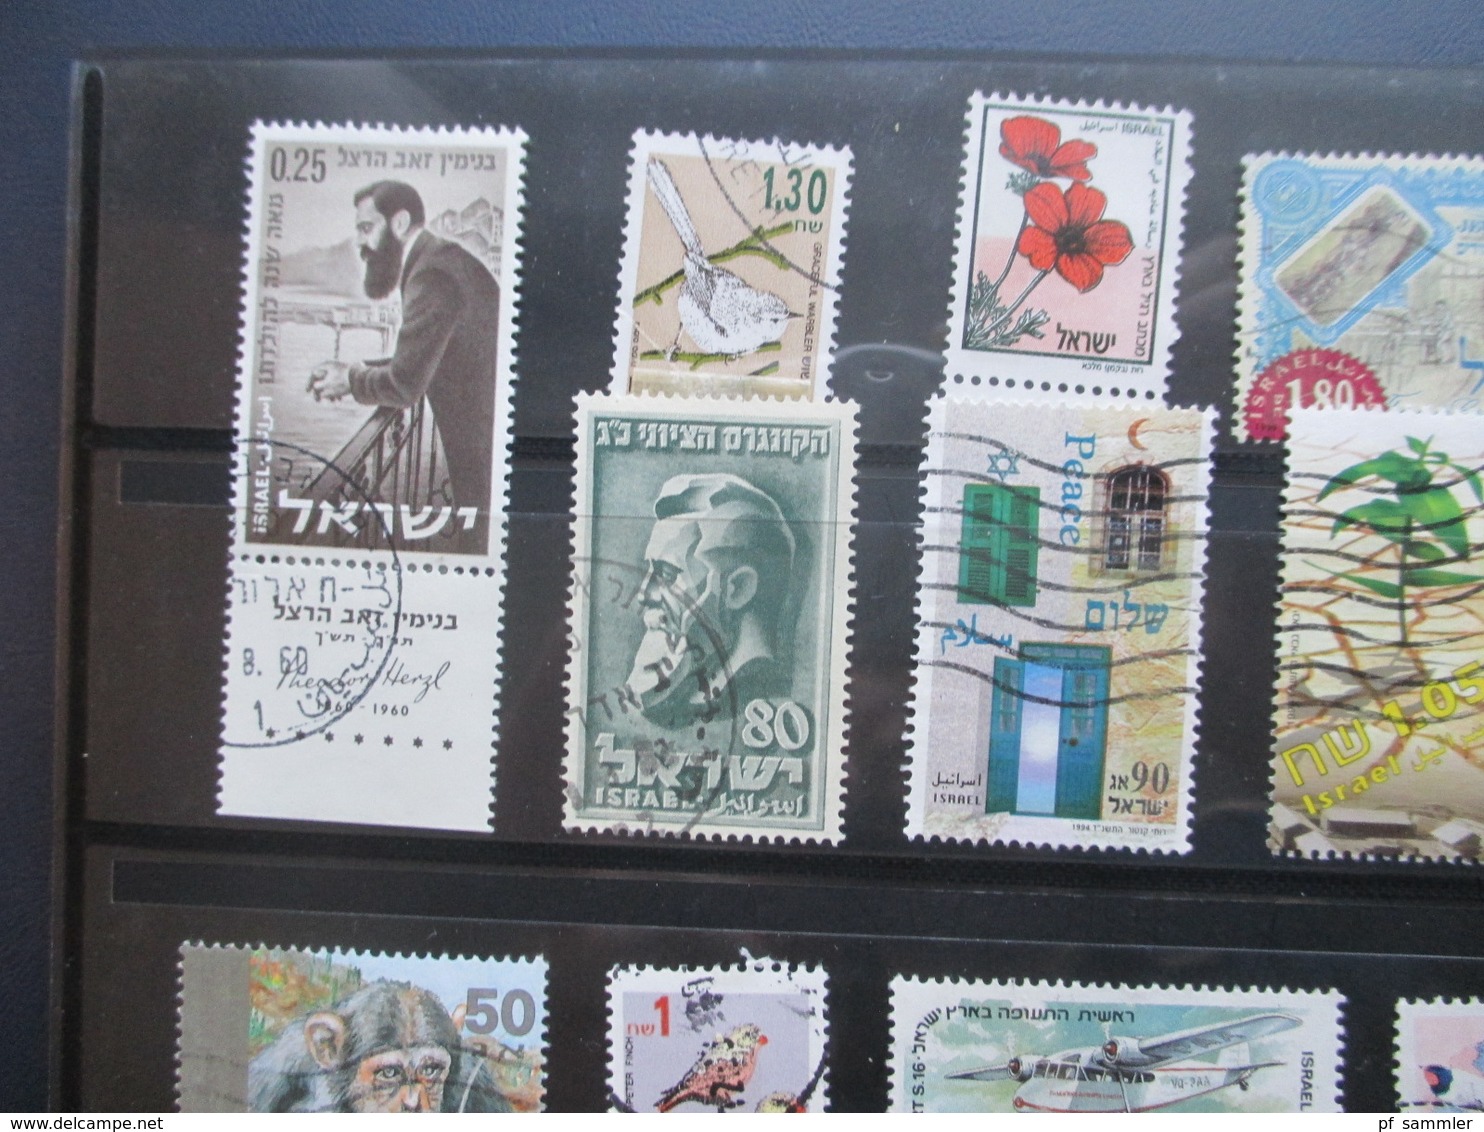 Slg. Naher Osten 1950er - 2013 mit etl. Blocks / Randstücken / tolle Motive!! Israel, Jordanien, Syrien, Palästina.